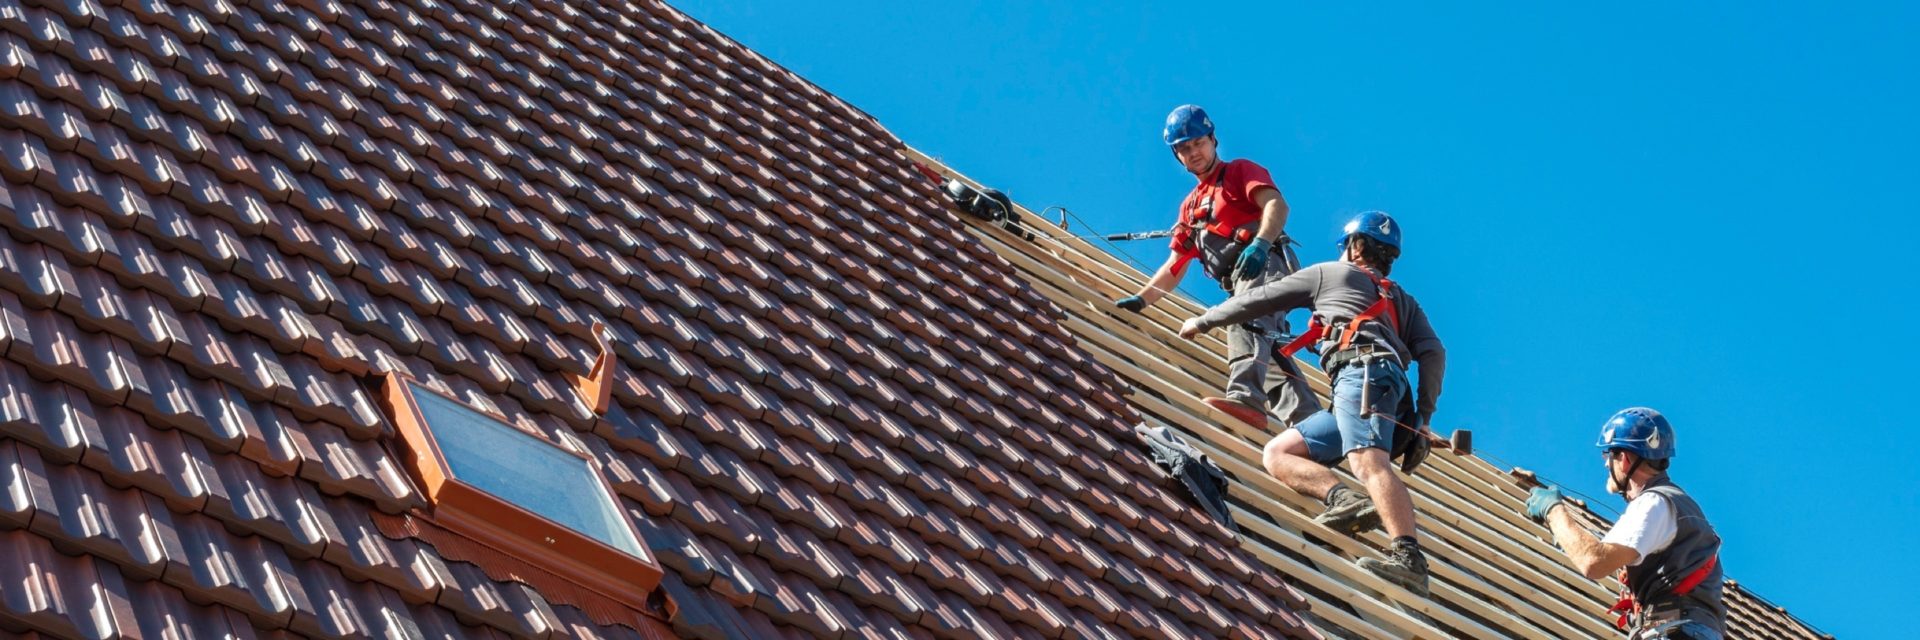 Commercial Roof Repair Contractor Tulsa Ok